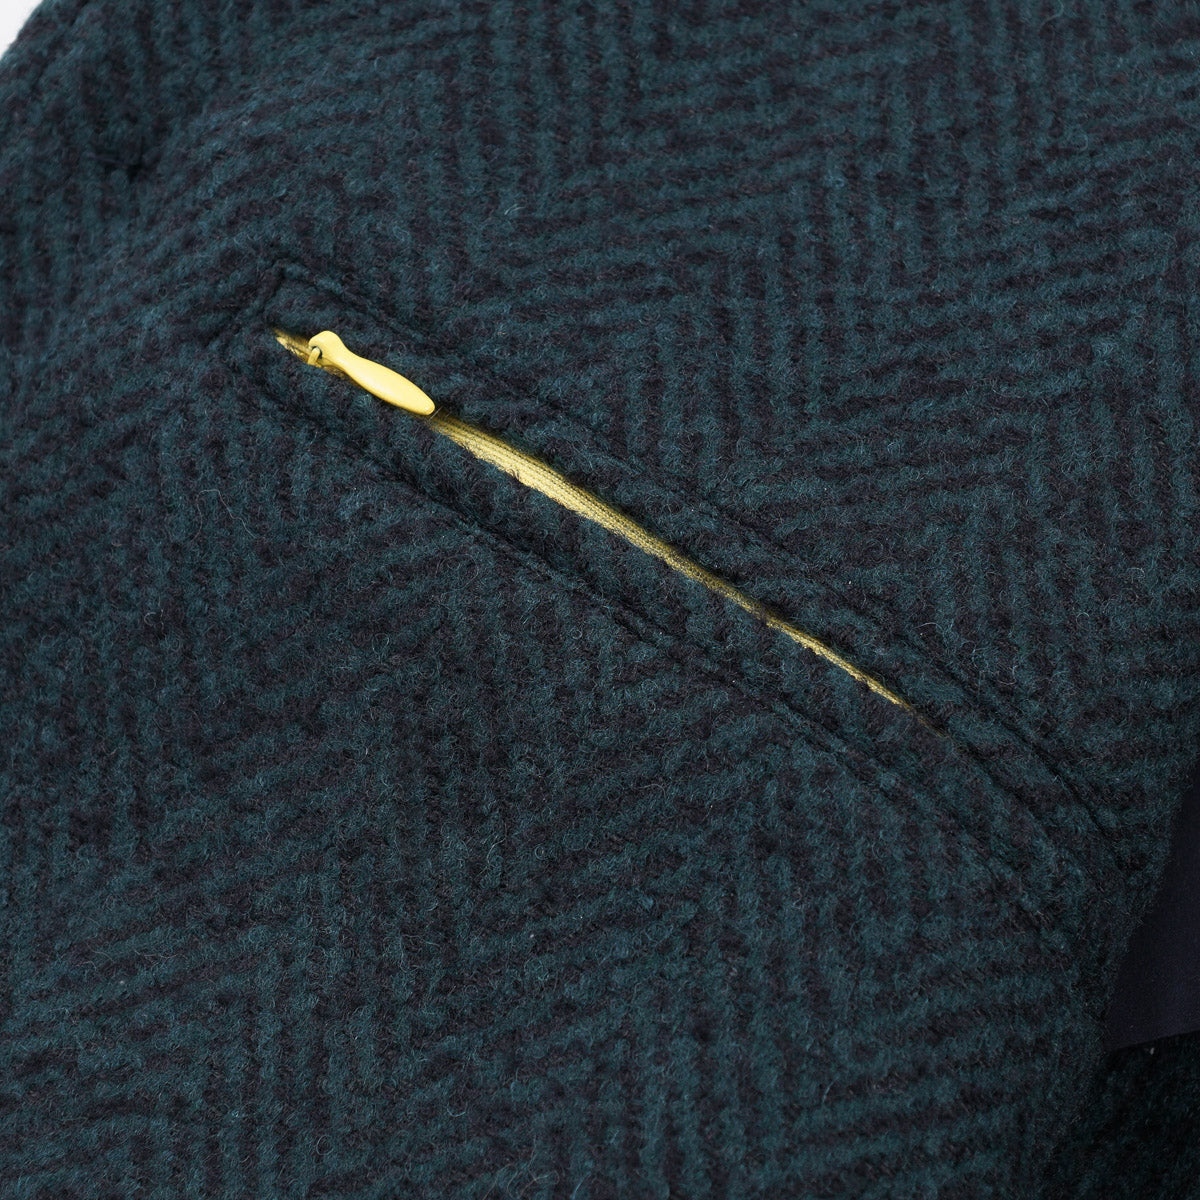 Sartorio Soft Wool Shirt-Jacket - Top Shelf Apparel